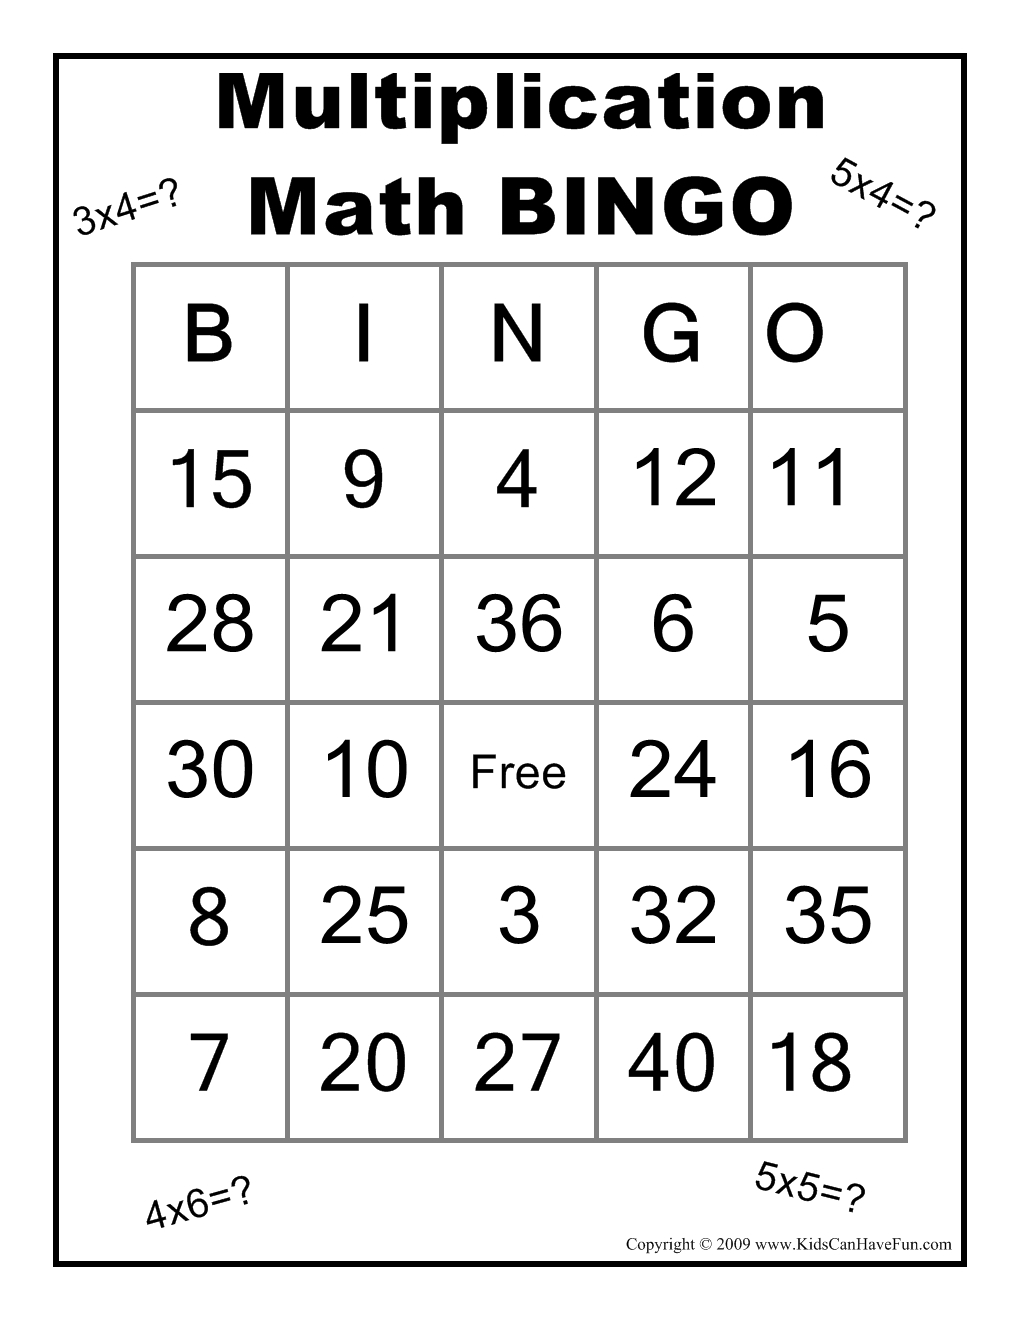 Multiplication Math Bingo Game | Math Bingo, Math, Fun Math in Printable Multiplication Bingo